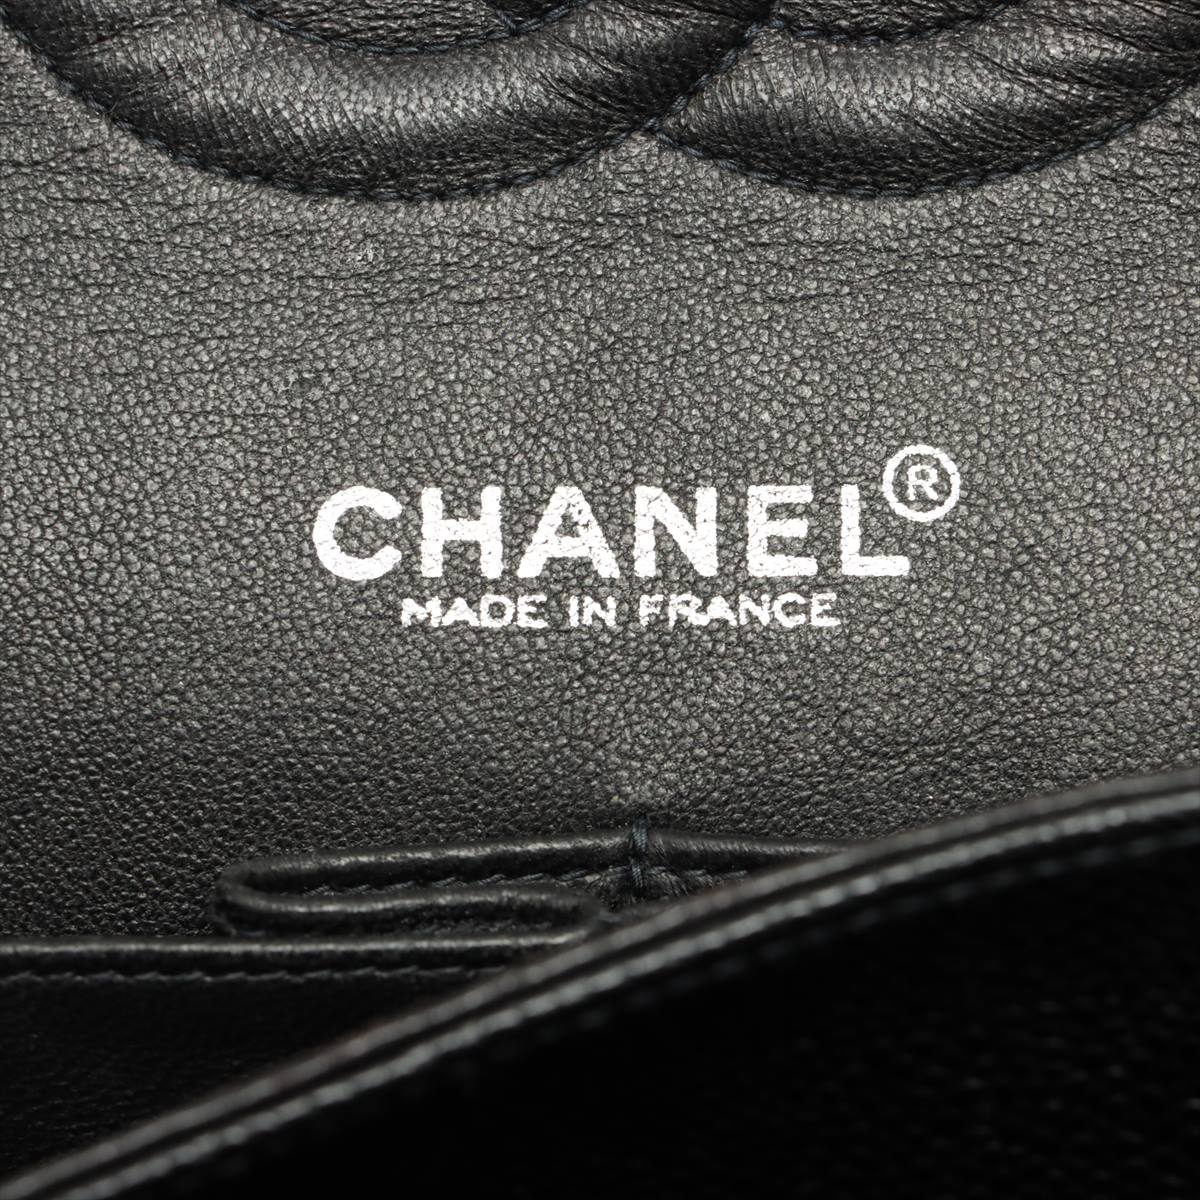 Chanel Matelasse Caviarskin Double flap Double chain bag Black Silver Metal fittings 6XXXXXX